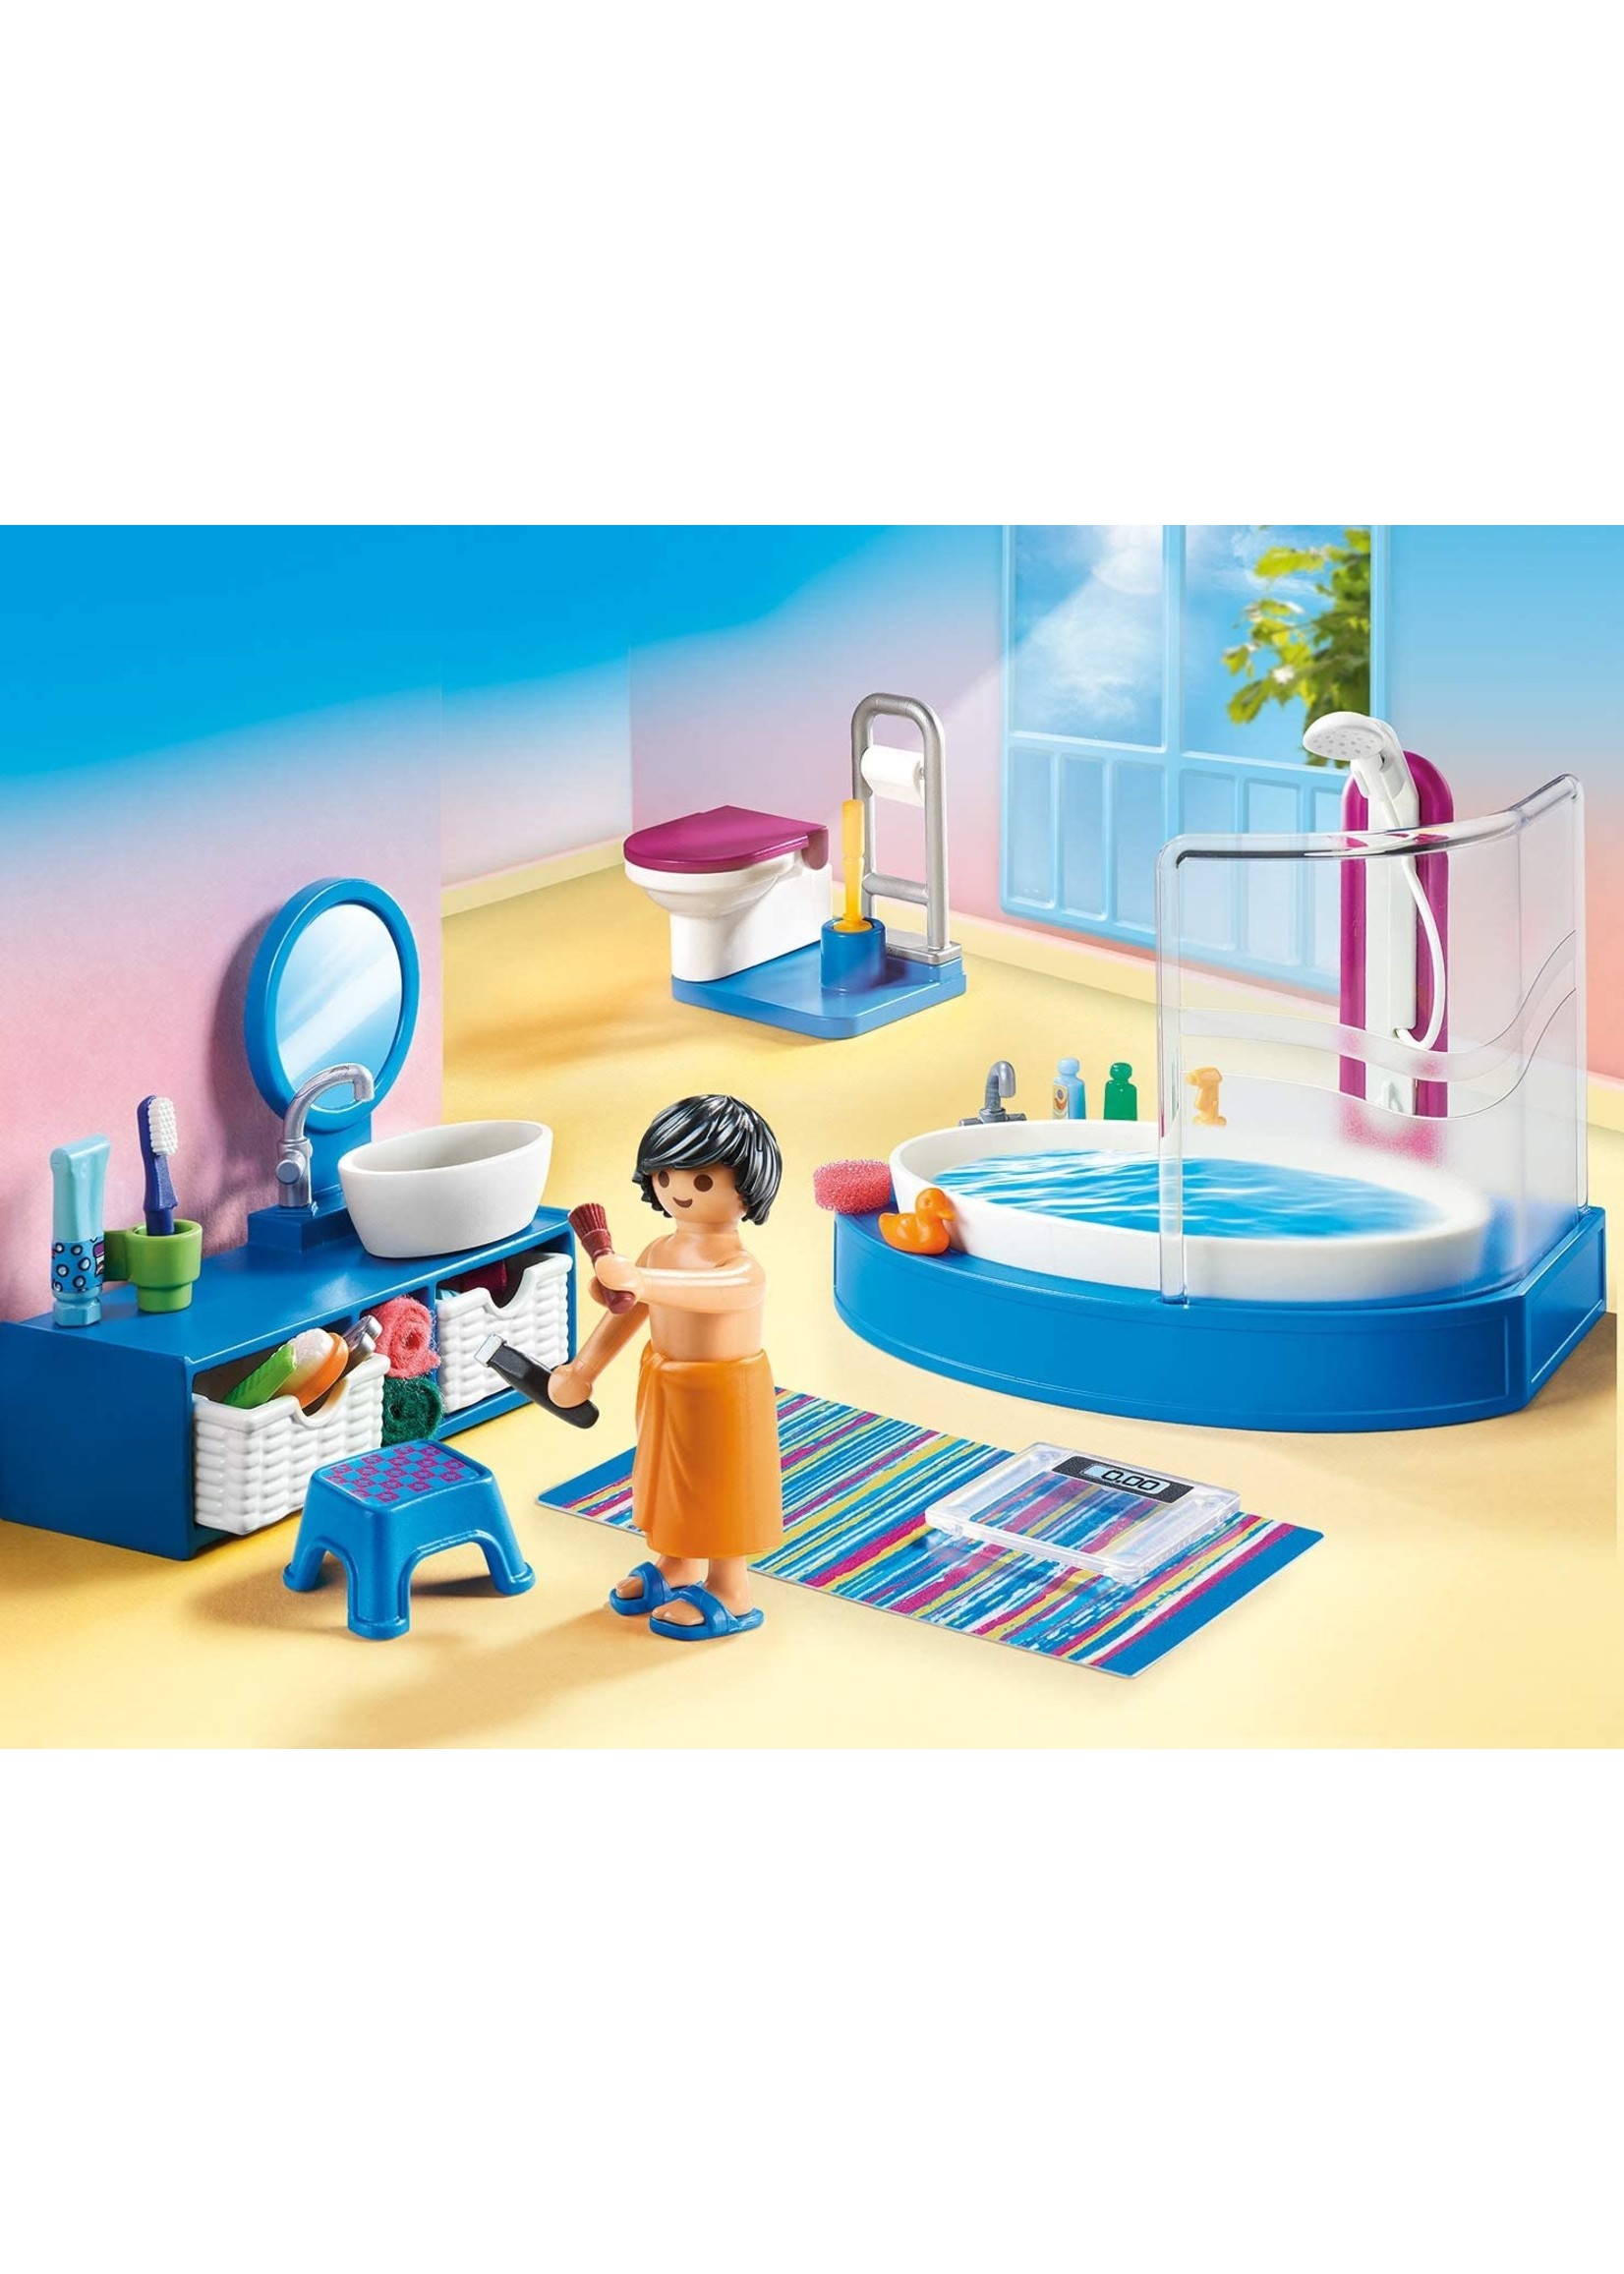 Playmobil 70211 - Bathroom with Tub